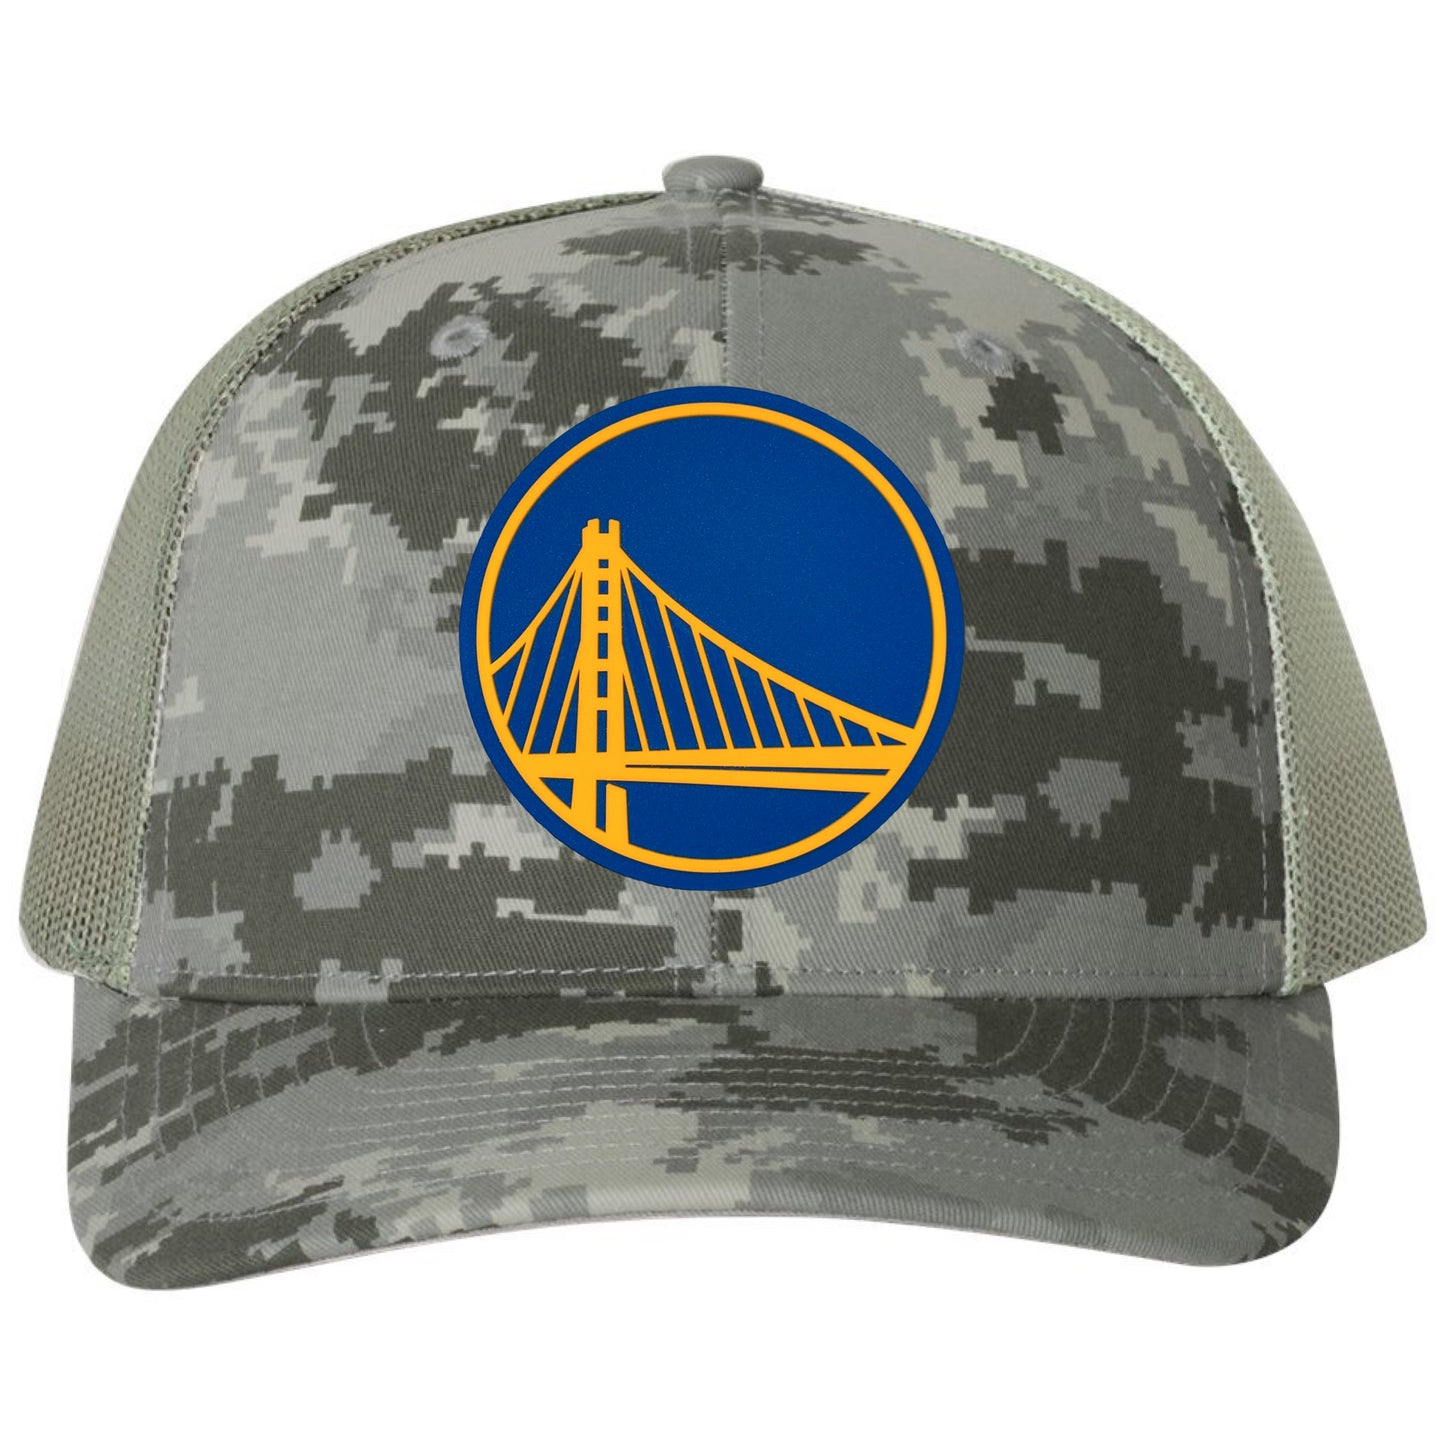 Golden State Warriors 3D Snapback Trucker Hat- Military Digital Camo - Ten Gallon Hat Co.